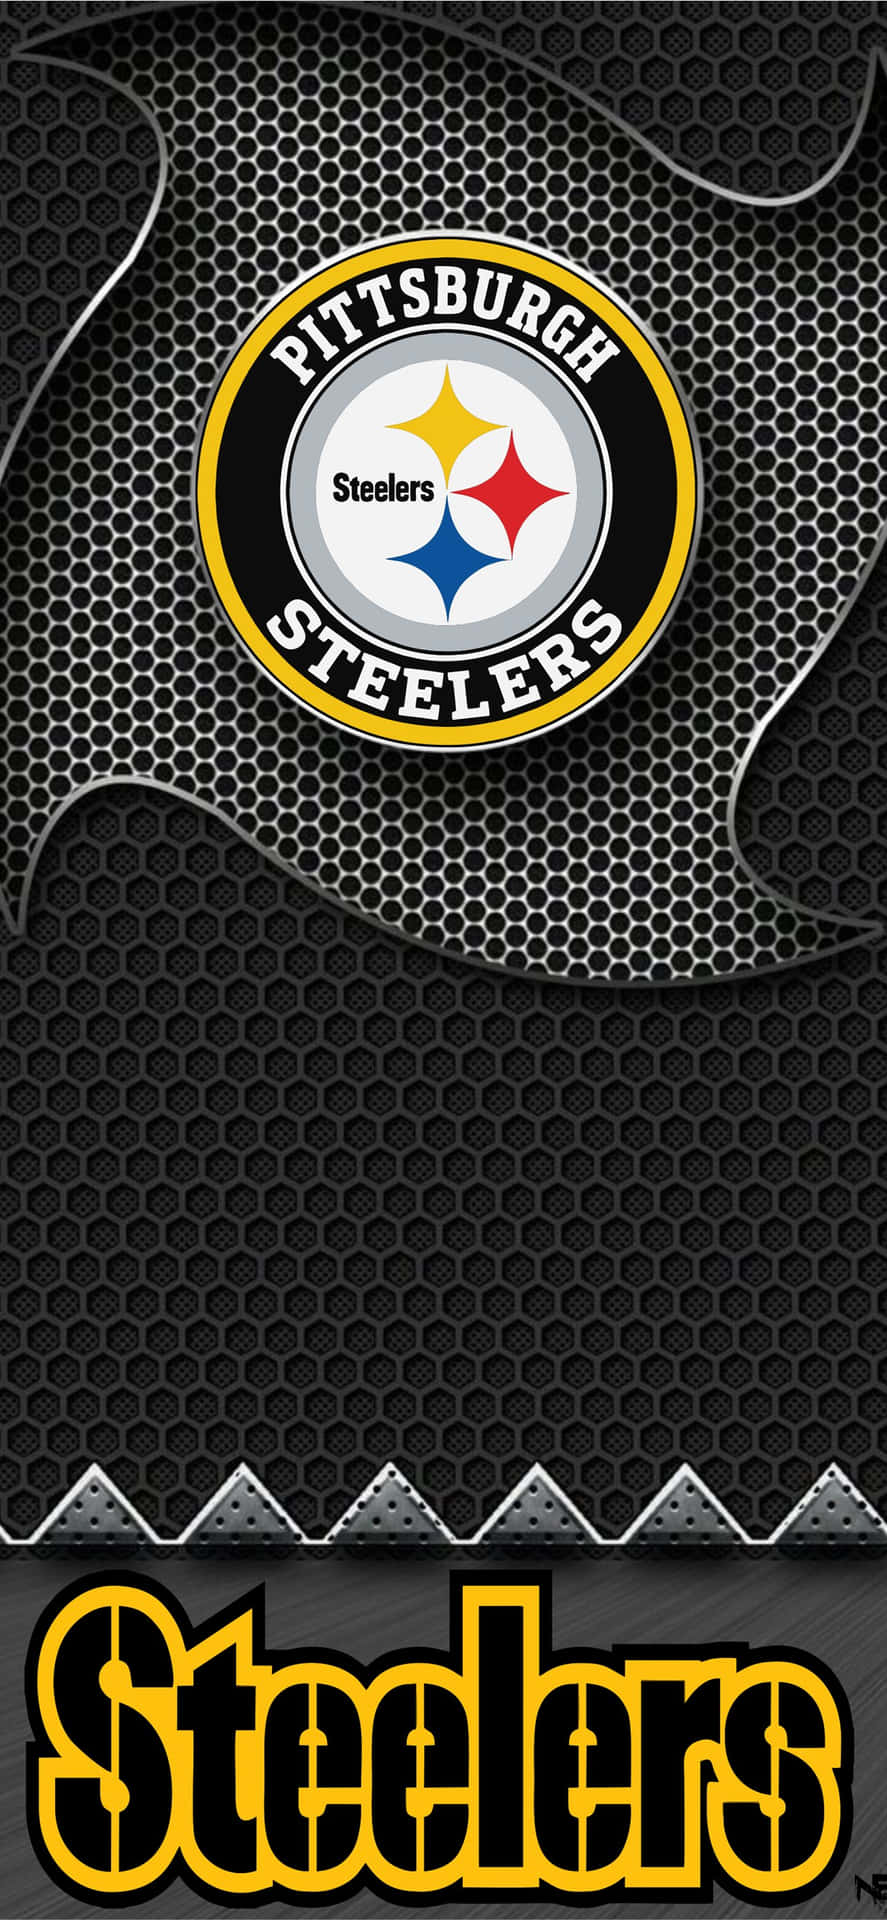 !NFL Fans juble: Vis din hold stolthed med Steelers IPhone wallpaper! Wallpaper